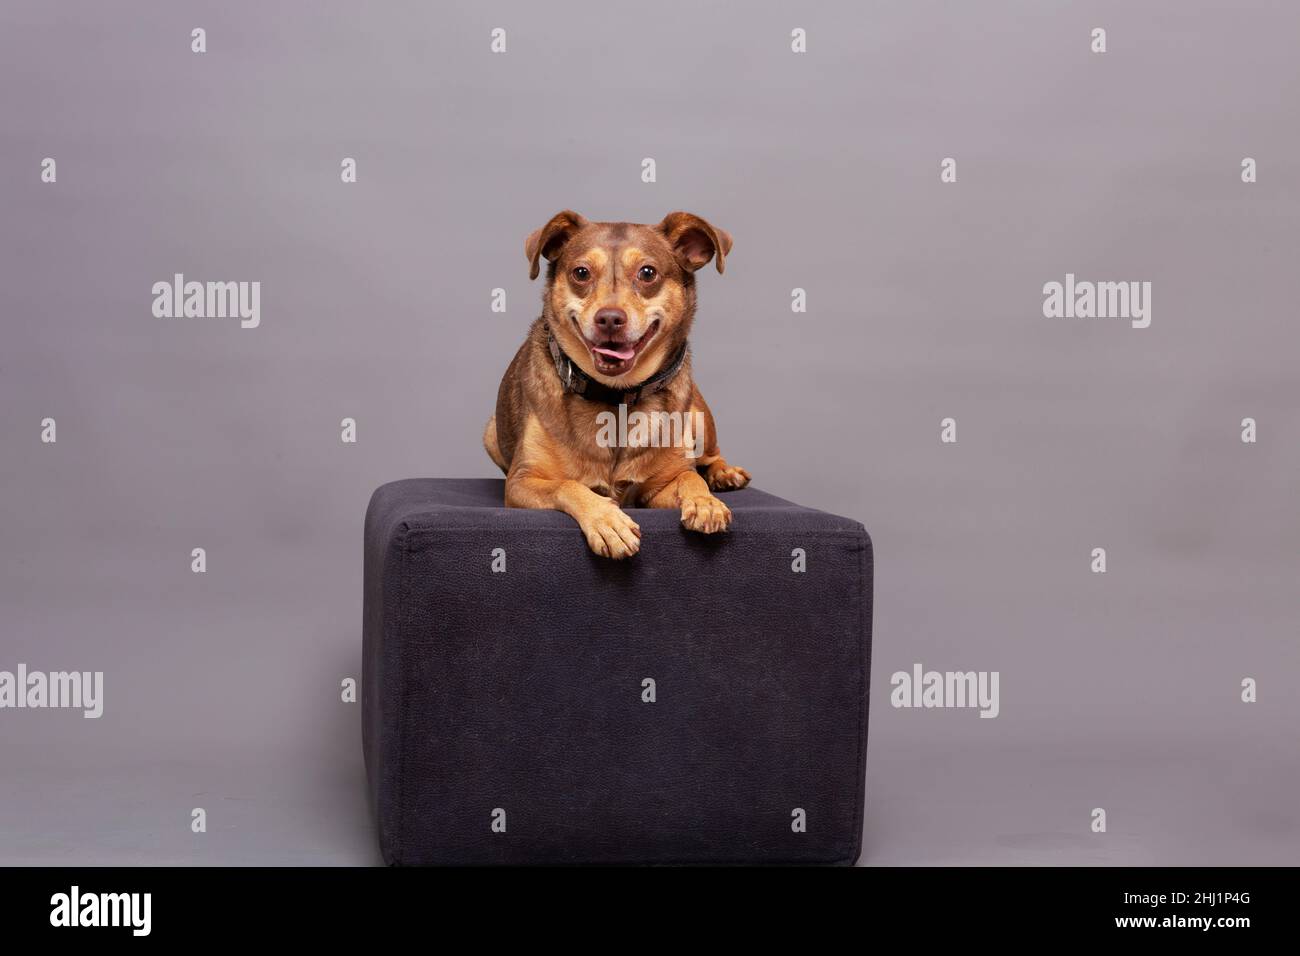 posing for studio photo, small brown dog on podium Stock Photo